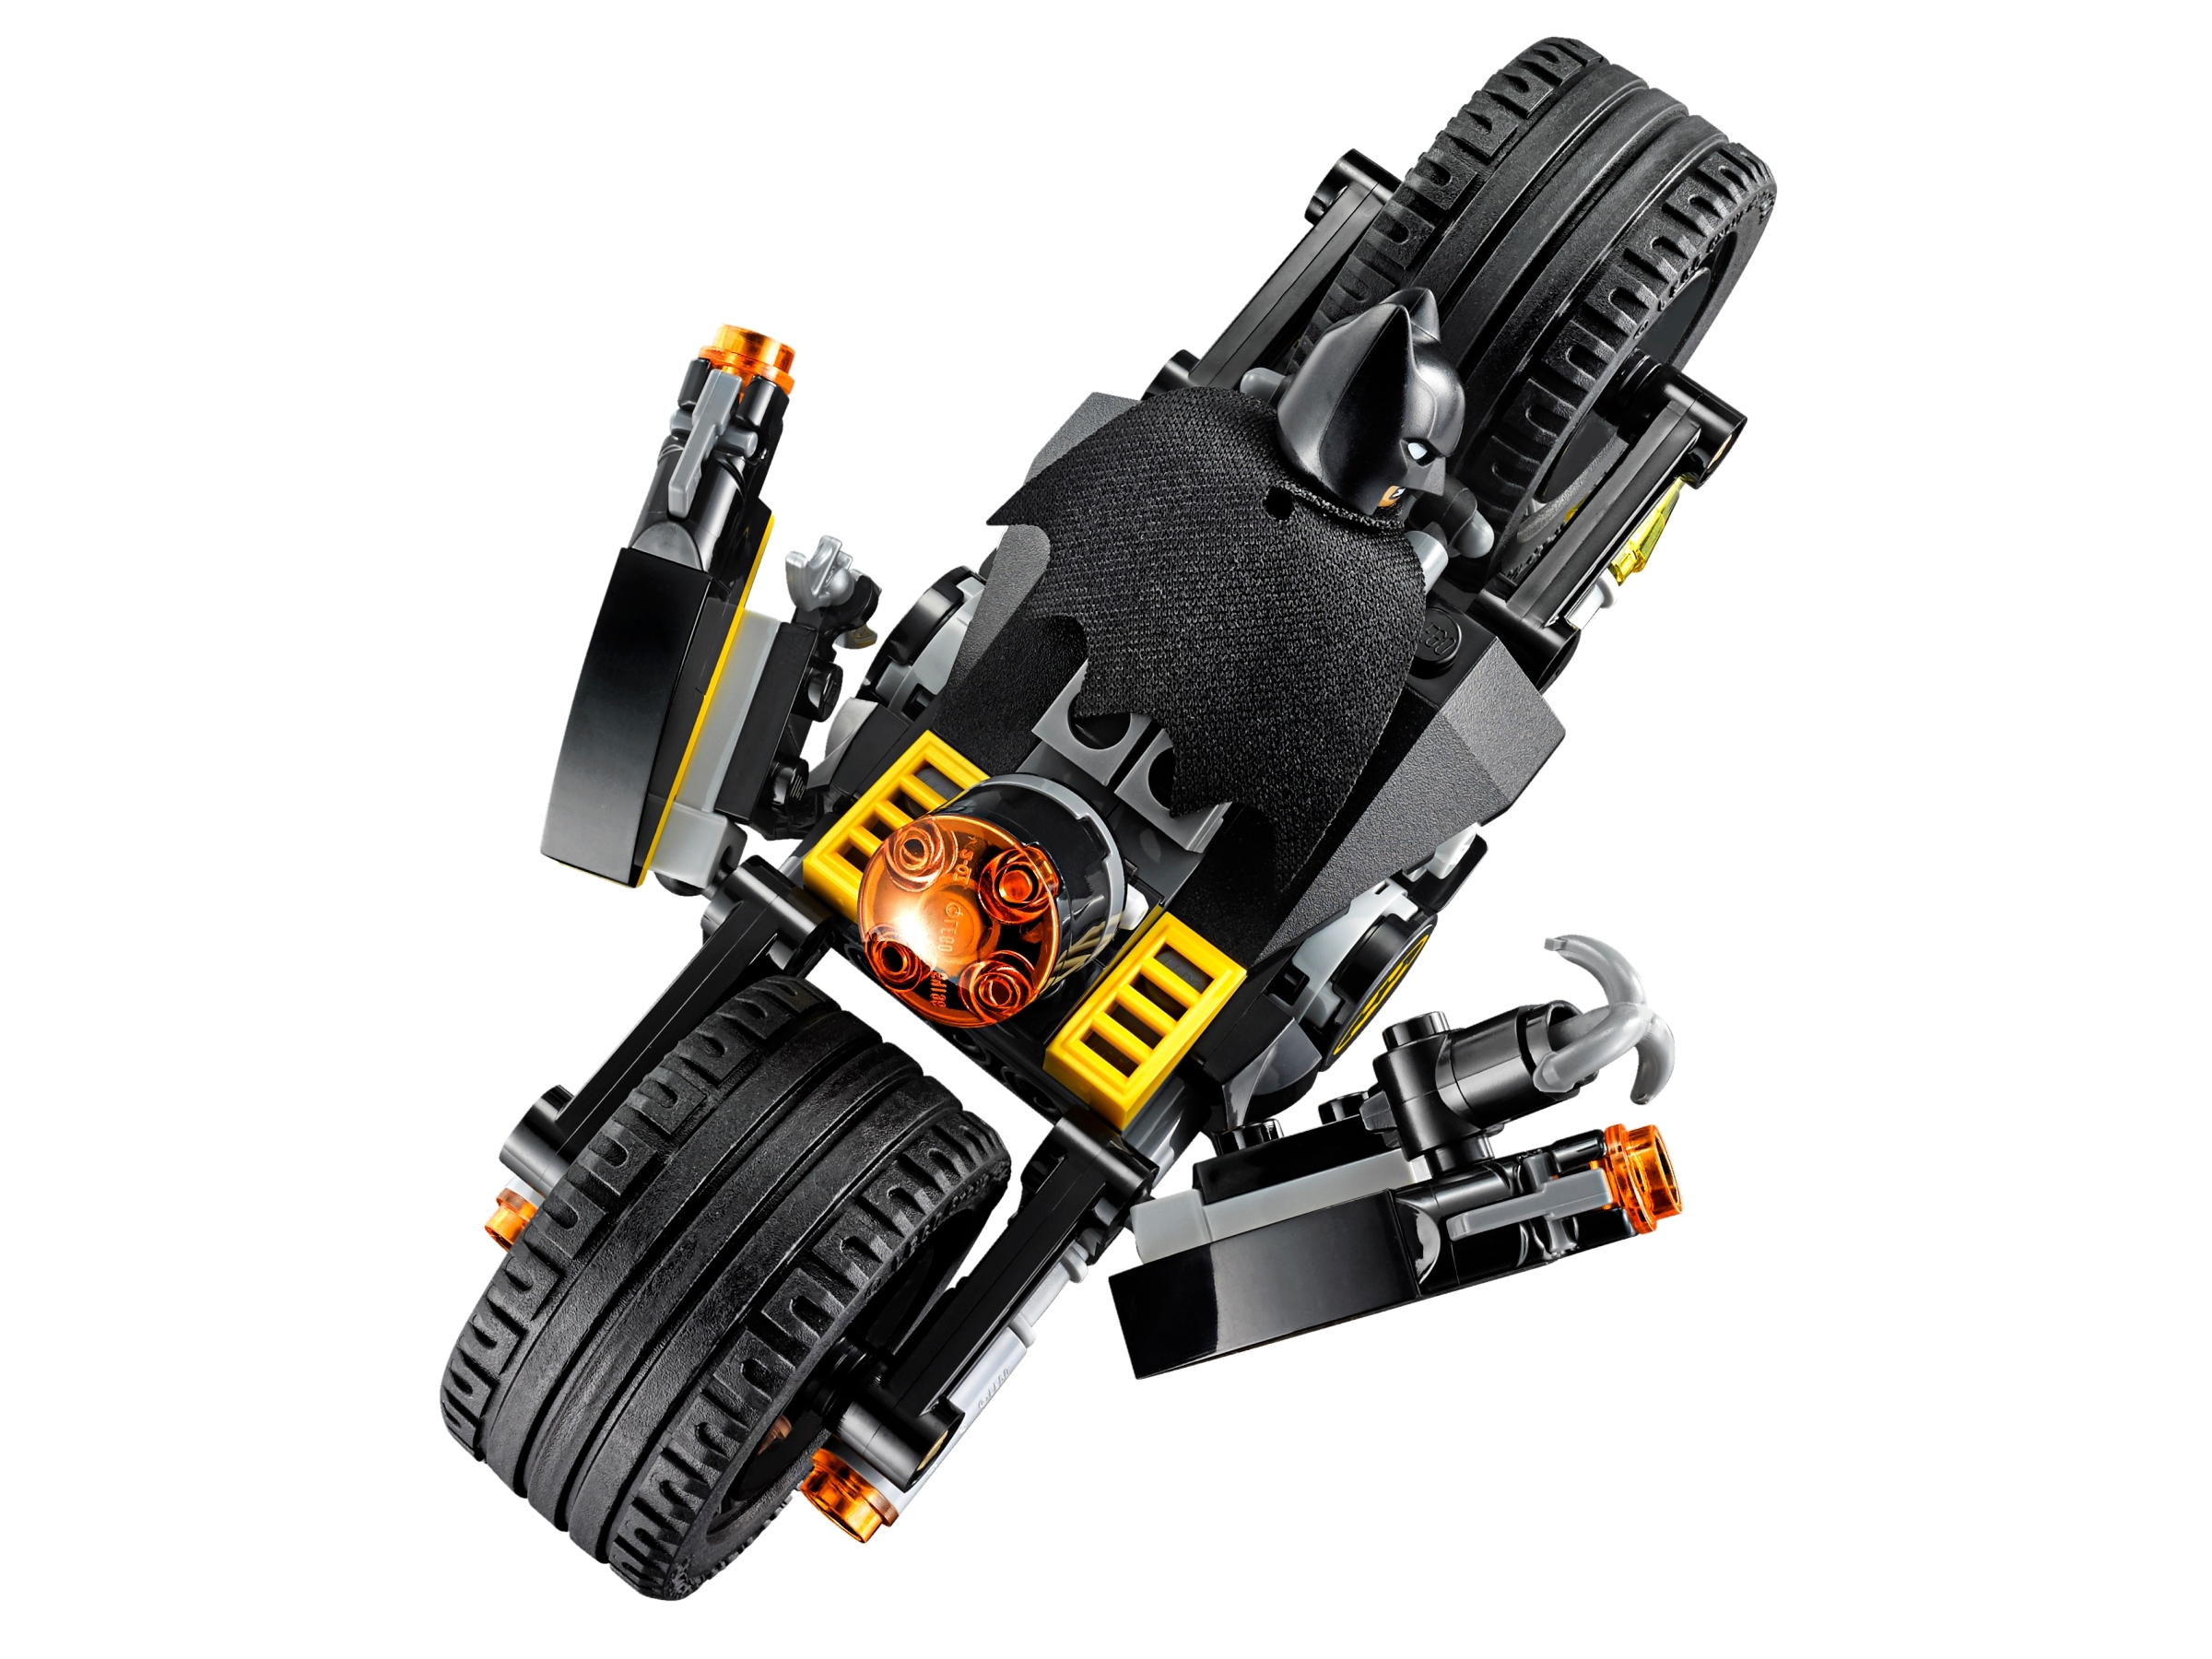 NEUF LEGO DC Heroes-Gotham City Cycle Chase construire uniquement #76053 - sans boîte/Figues 